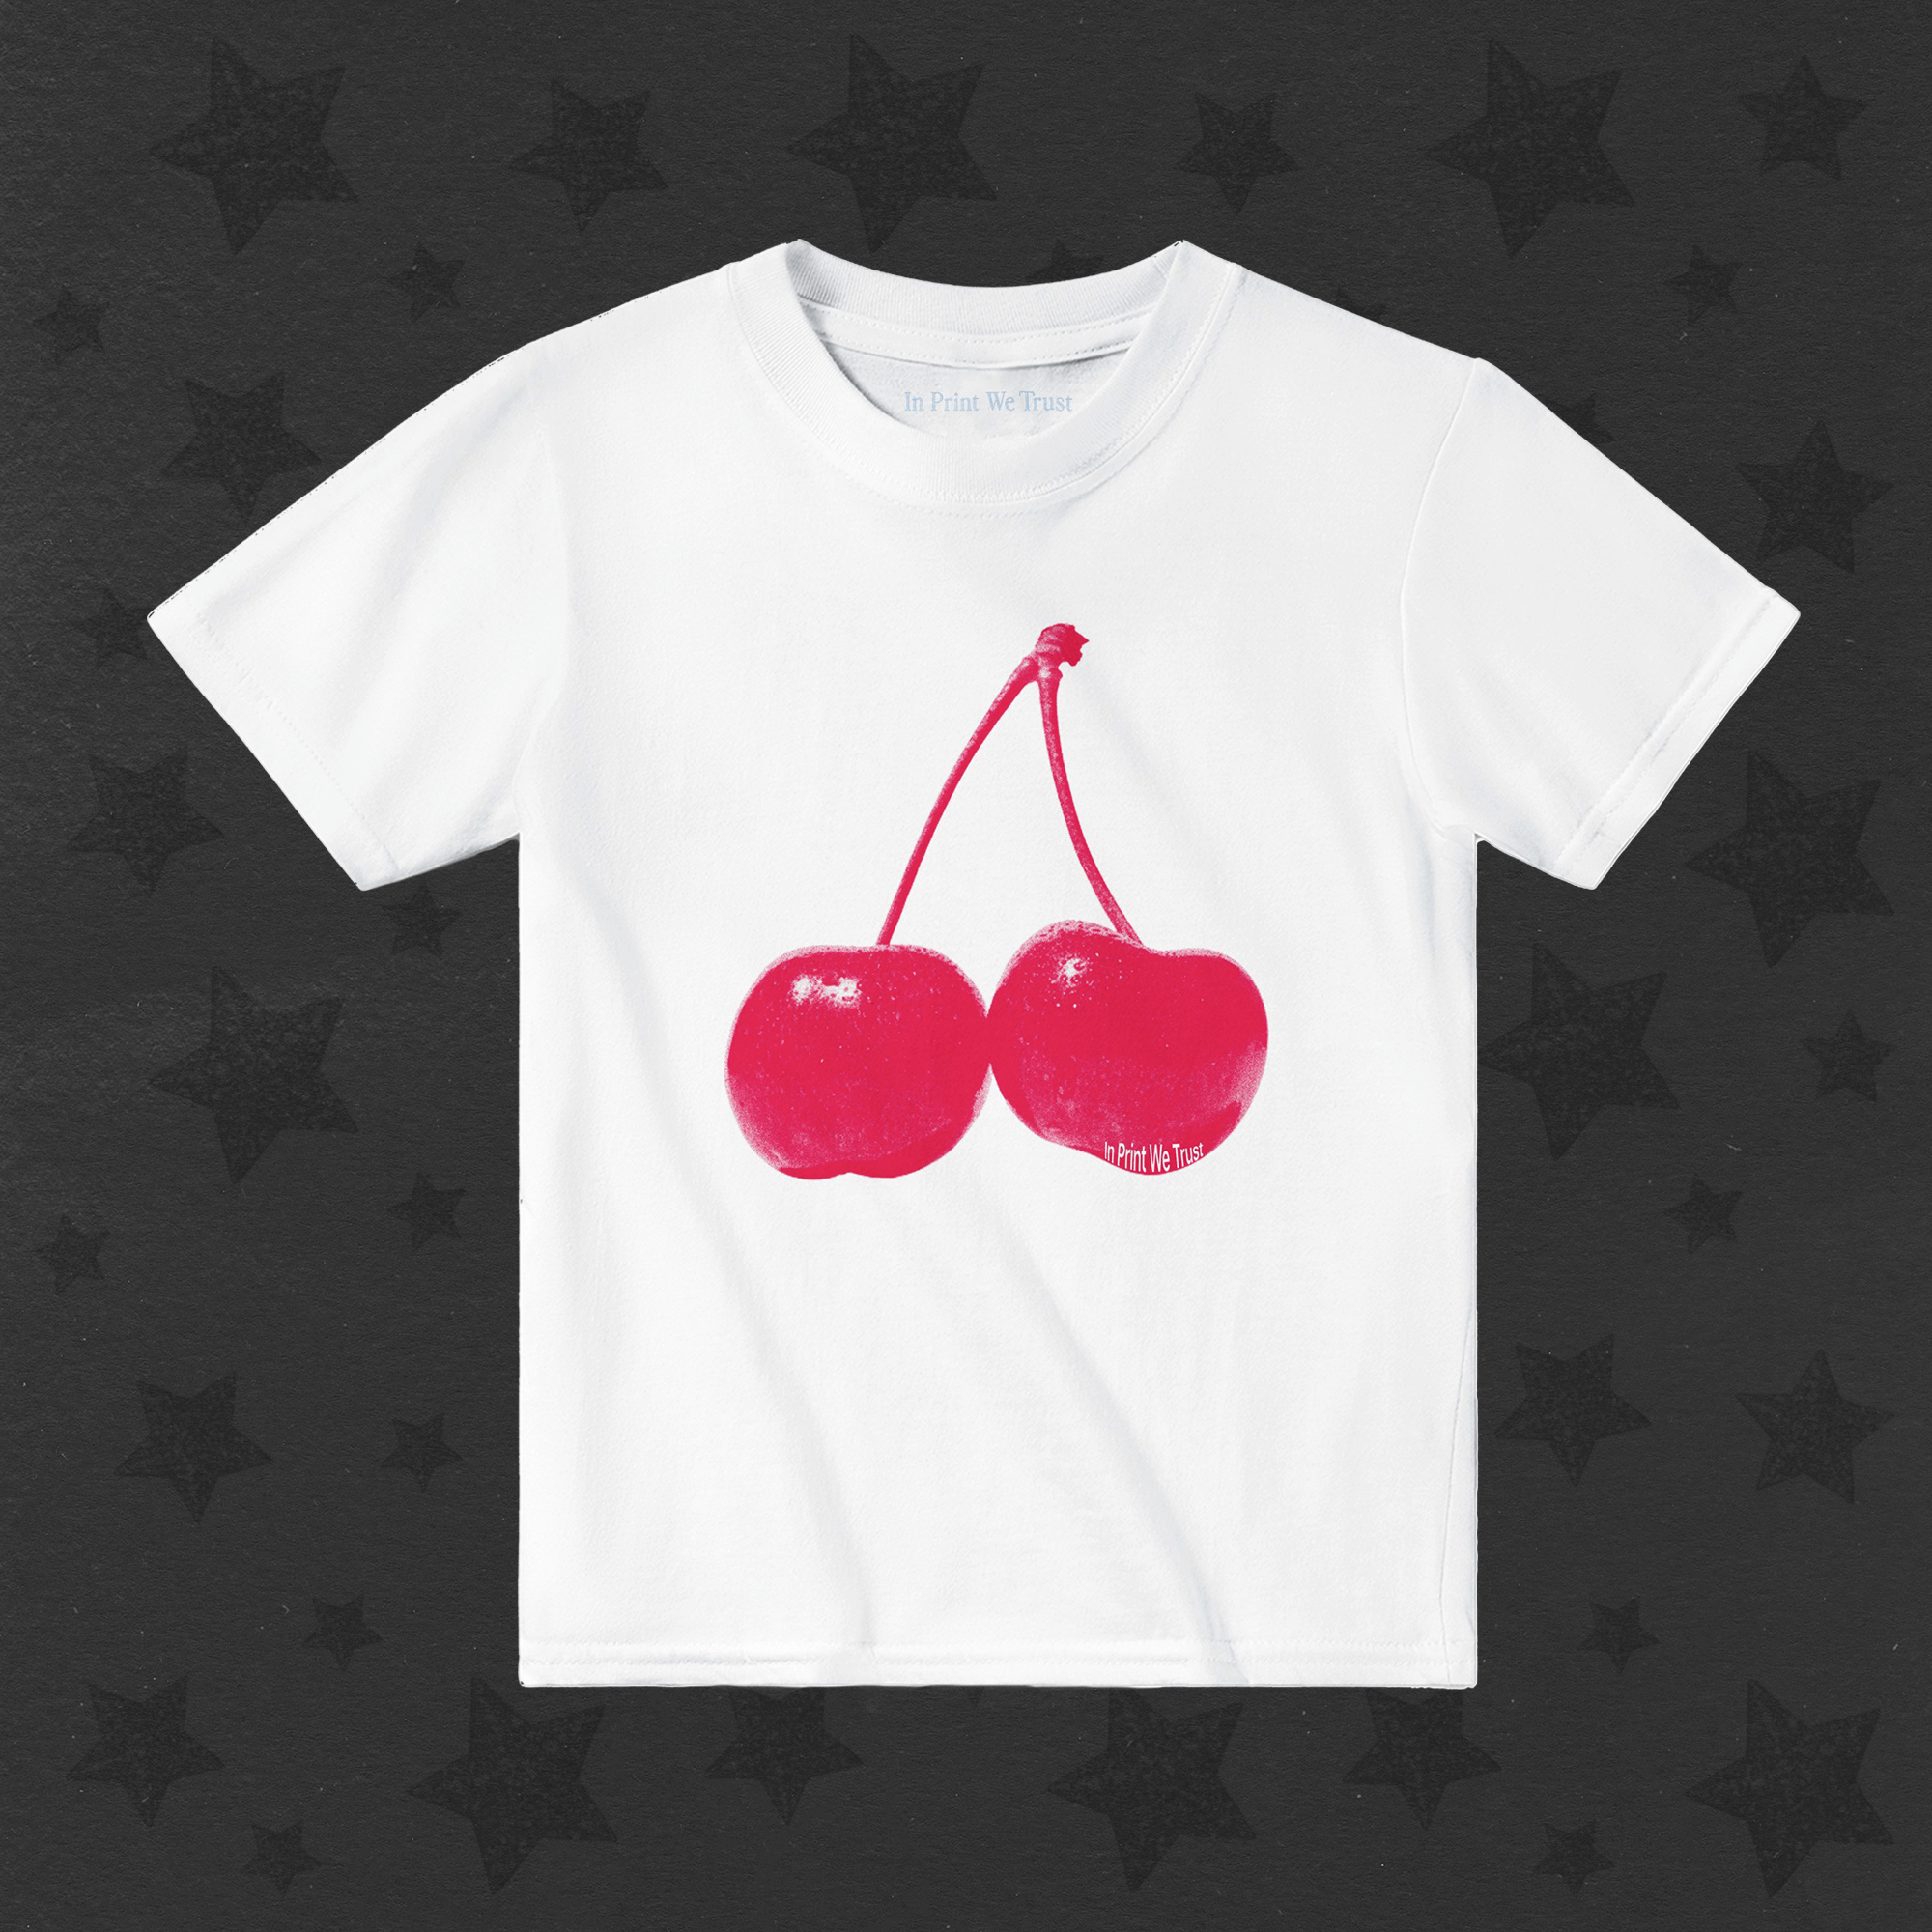 'Cherry' premium baby tee - In Print We Trust